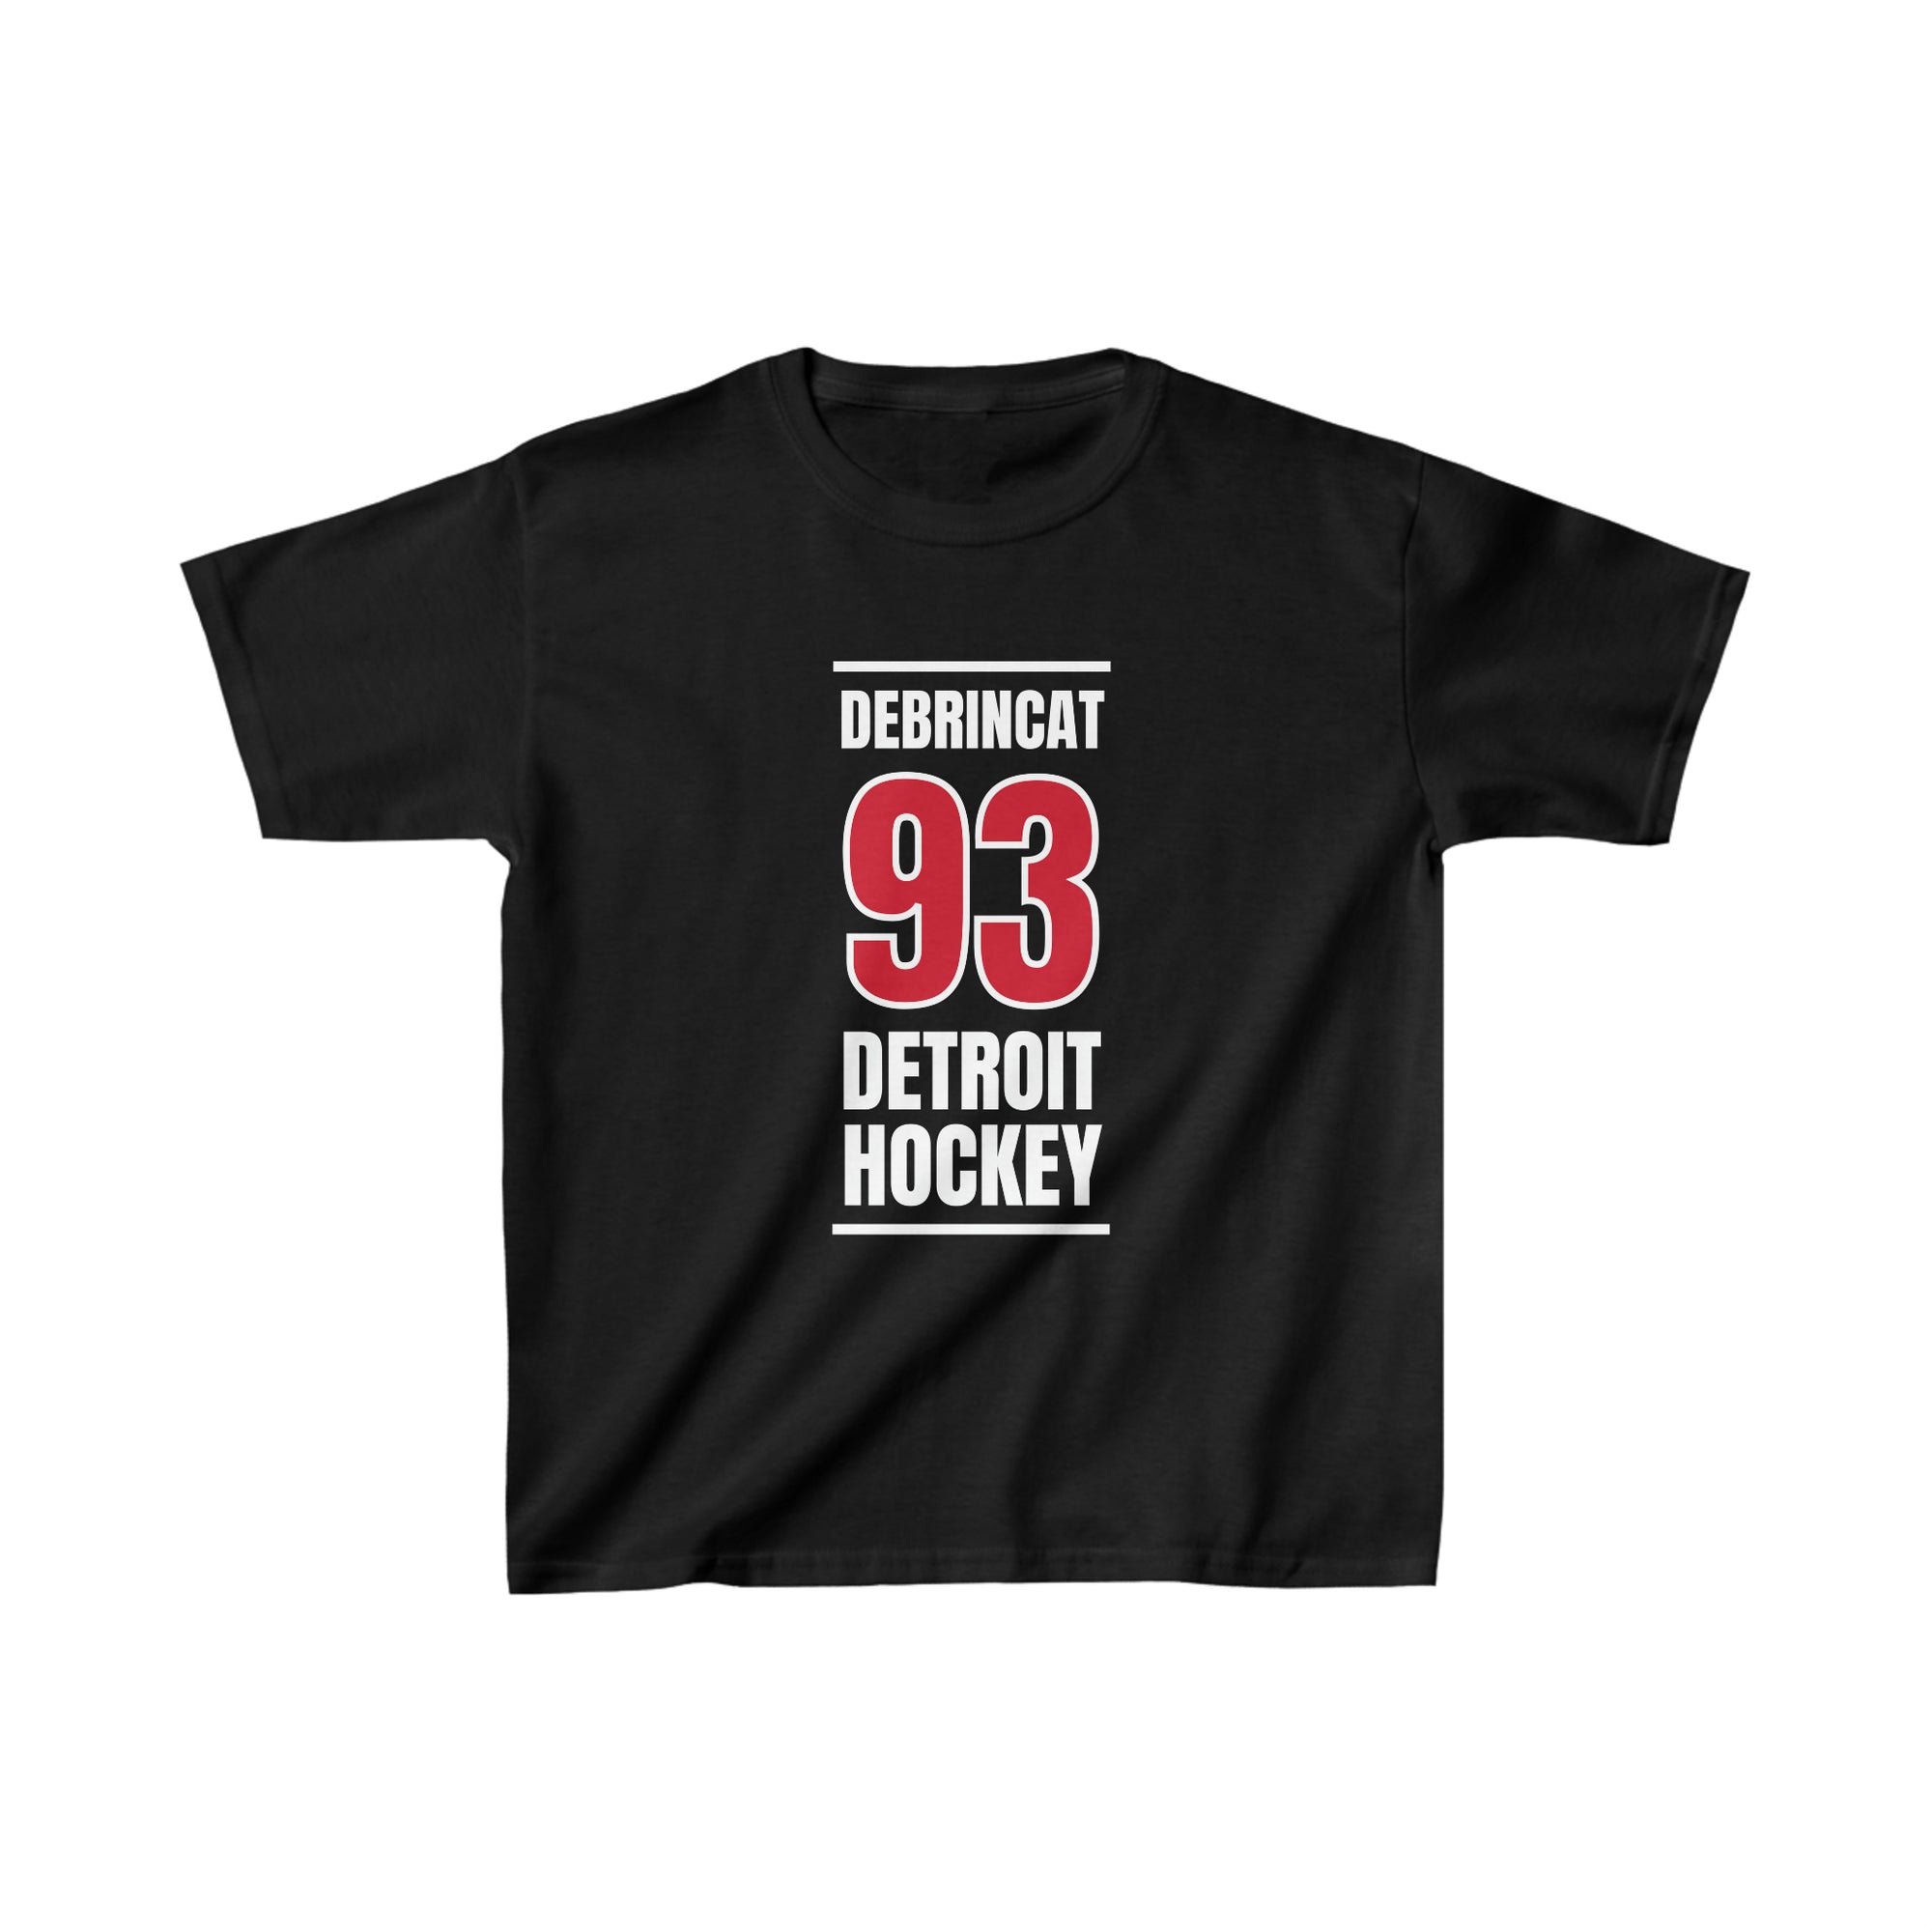 DeBrincat 93 Detroit Hockey Red Vertical Design Kids Tee